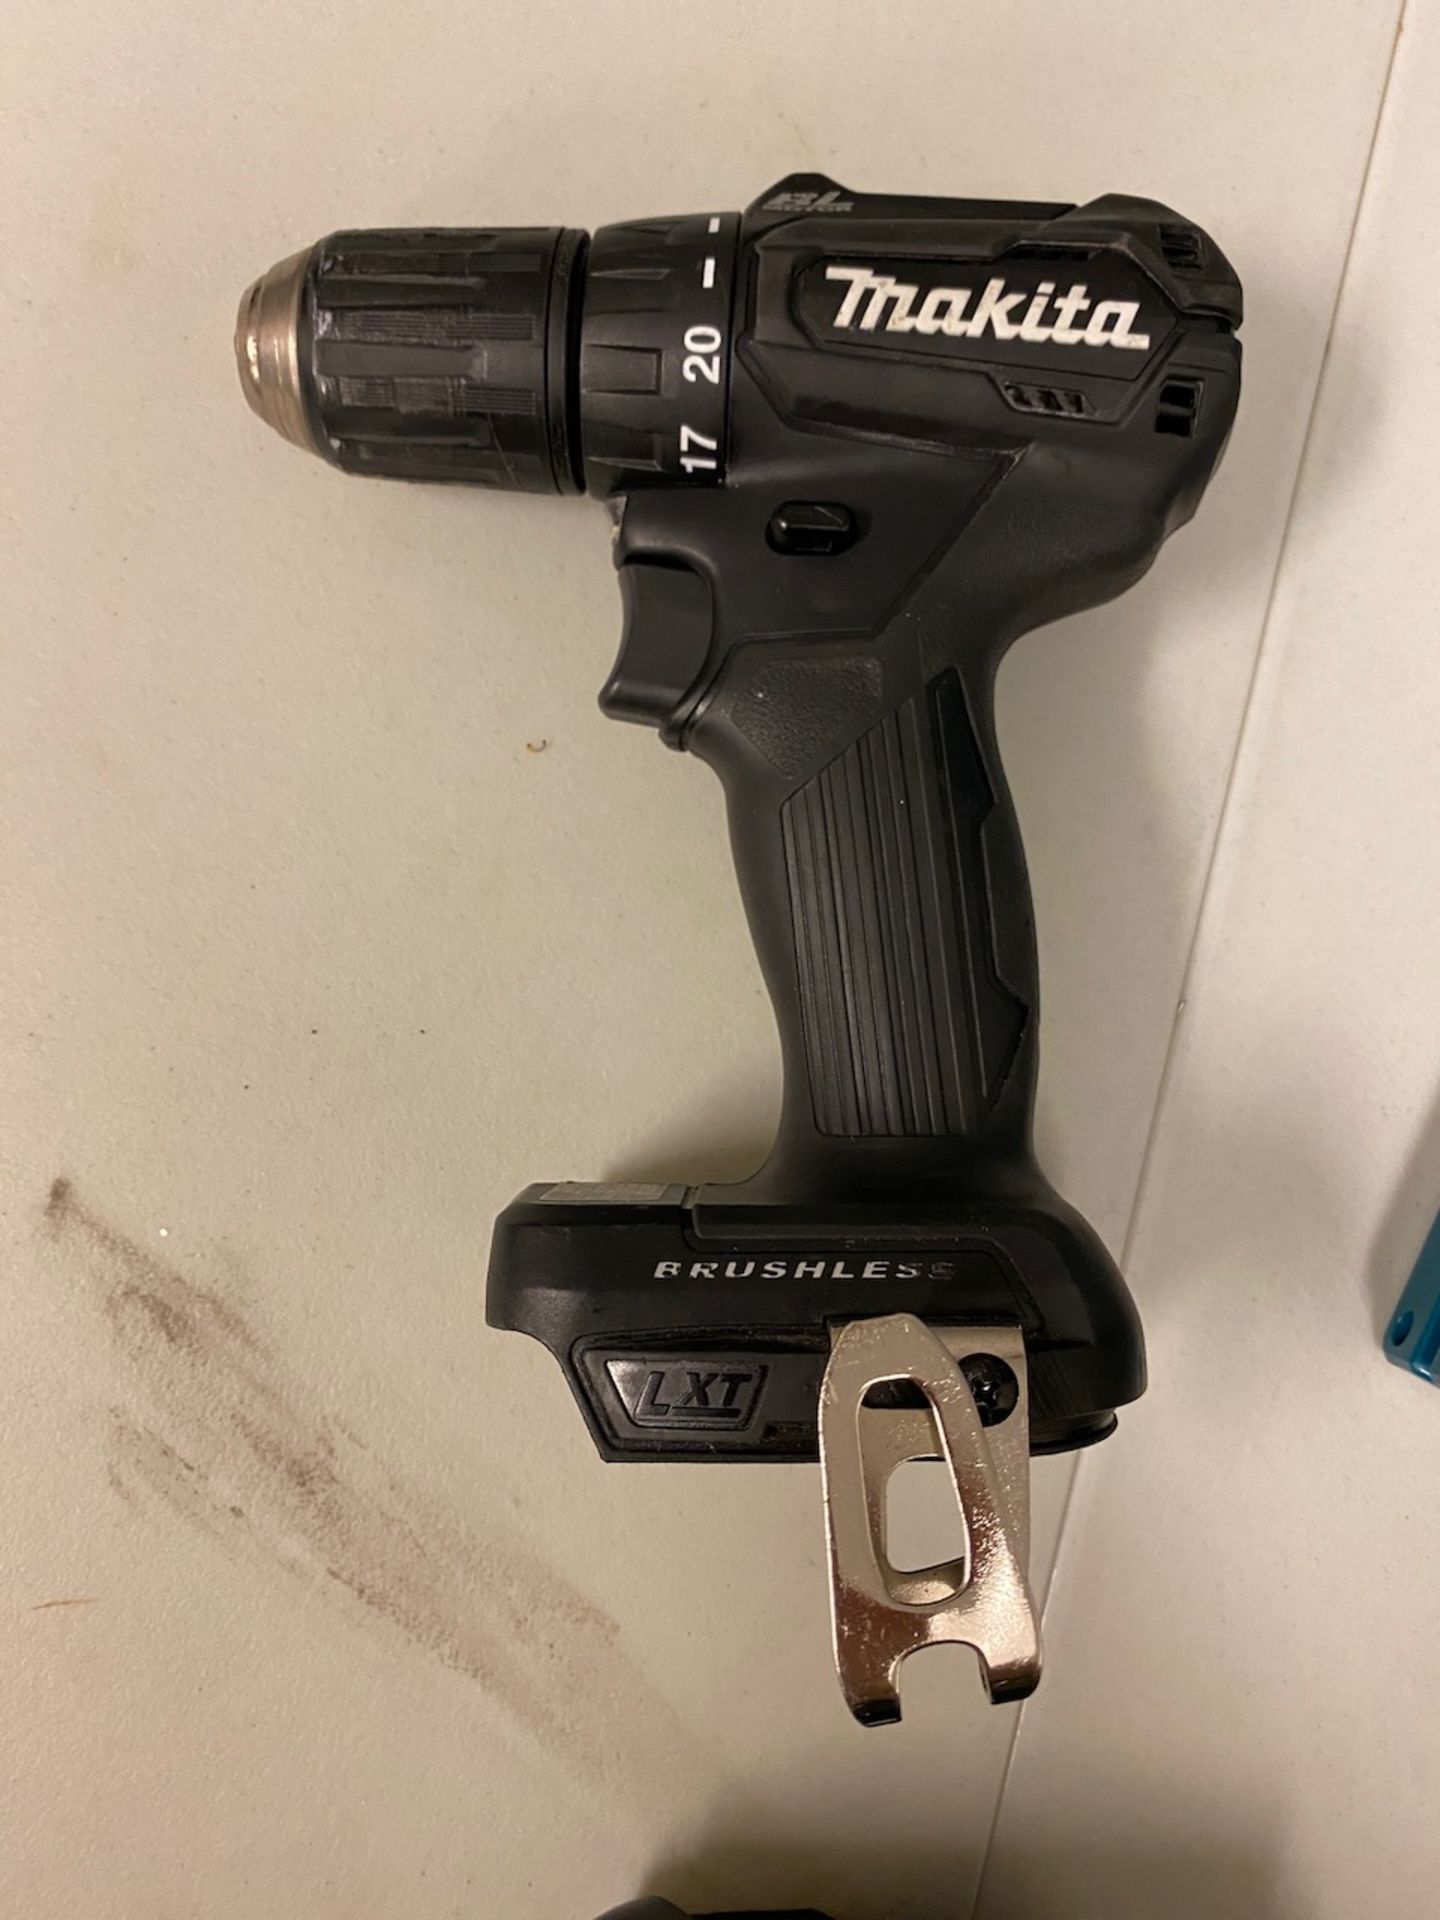 Makita lithium ion tool kit - Image 6 of 9